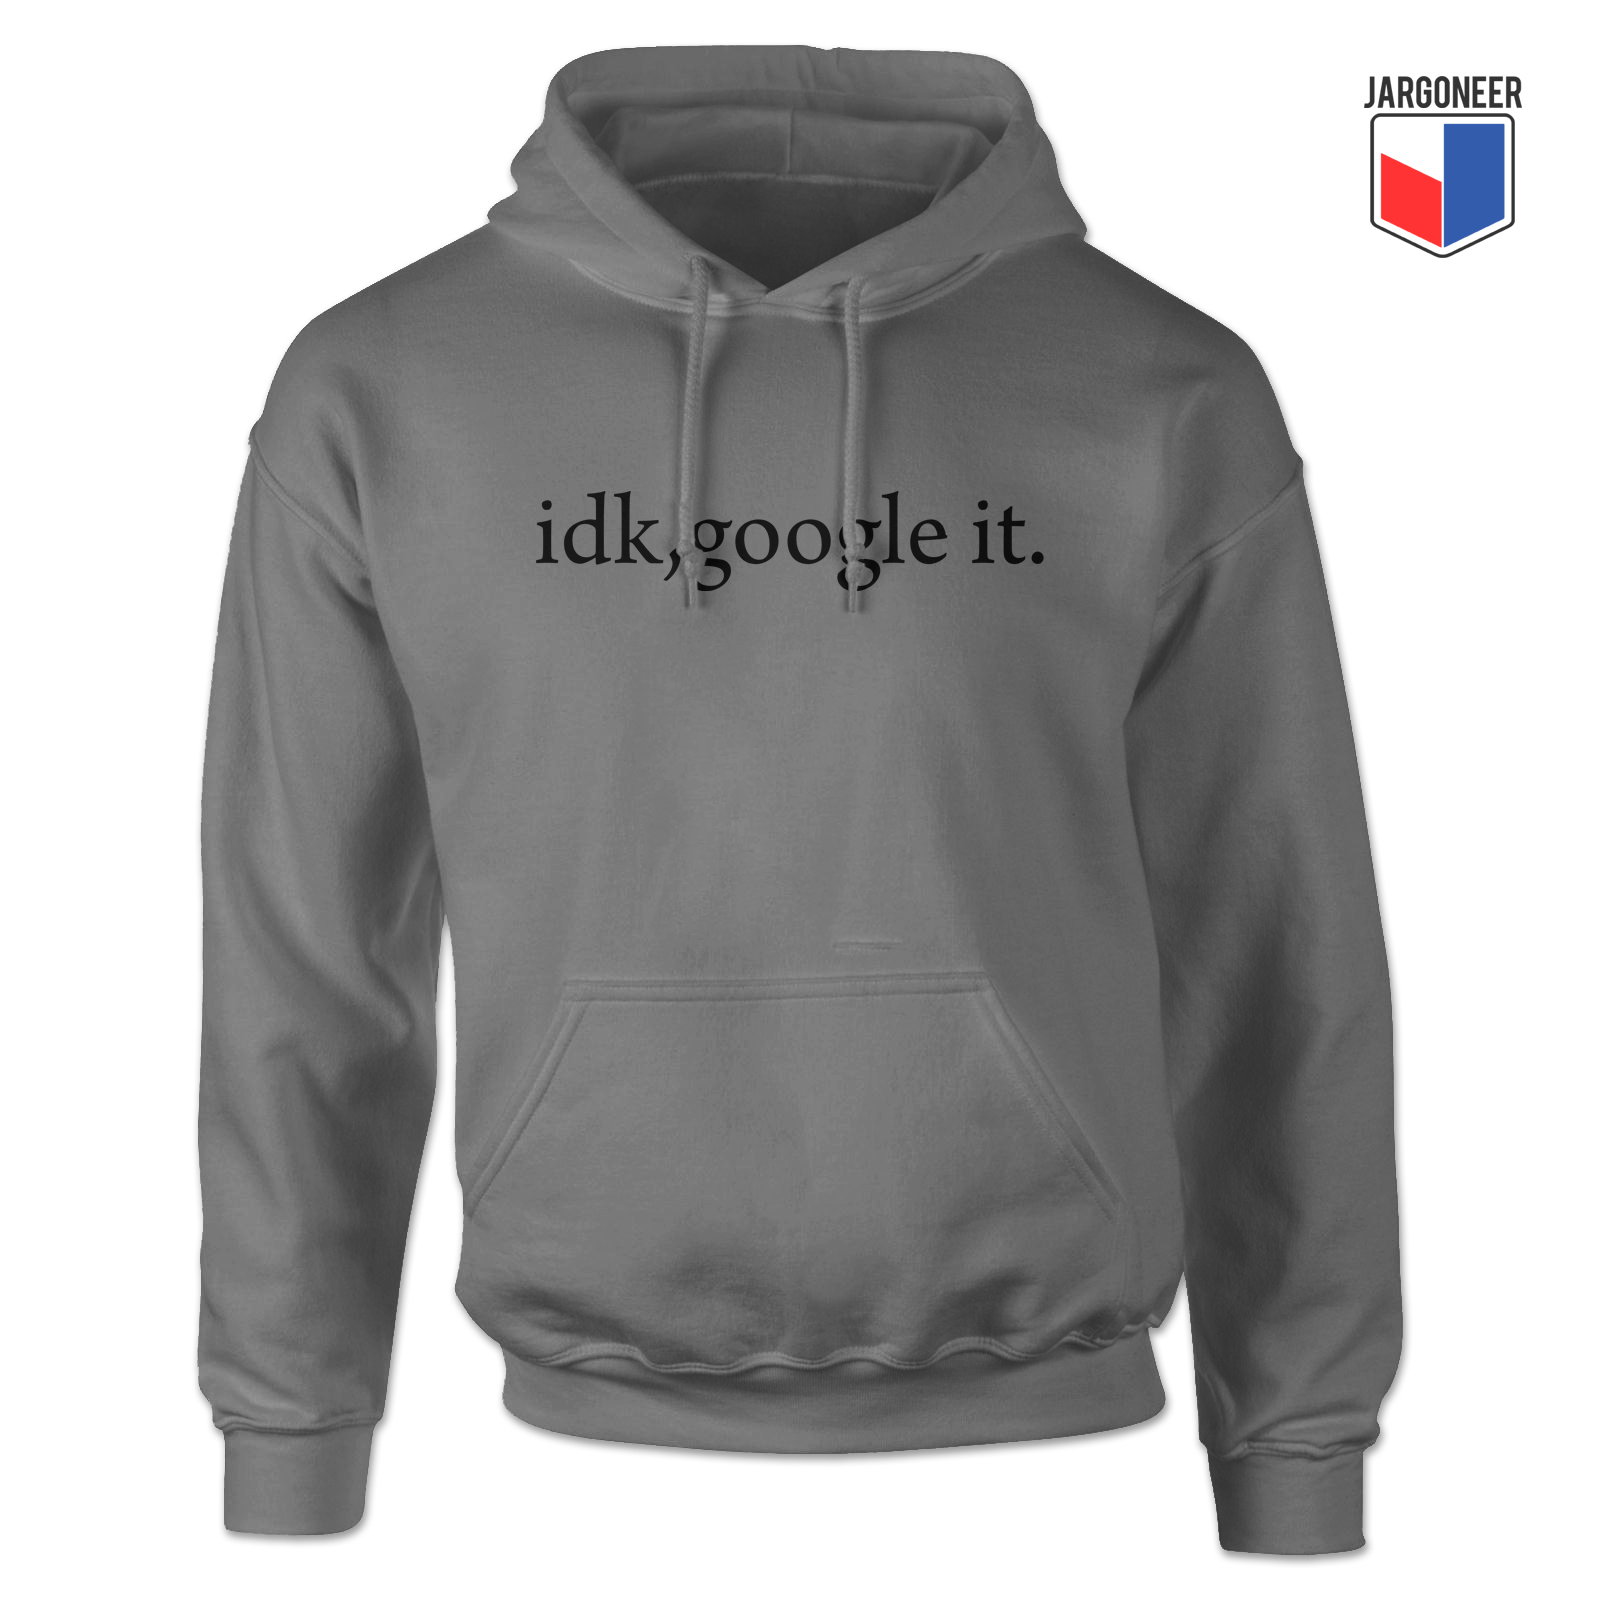 Idk google it grey hoodie - Shop Unique Graphic Cool Shirt Designs